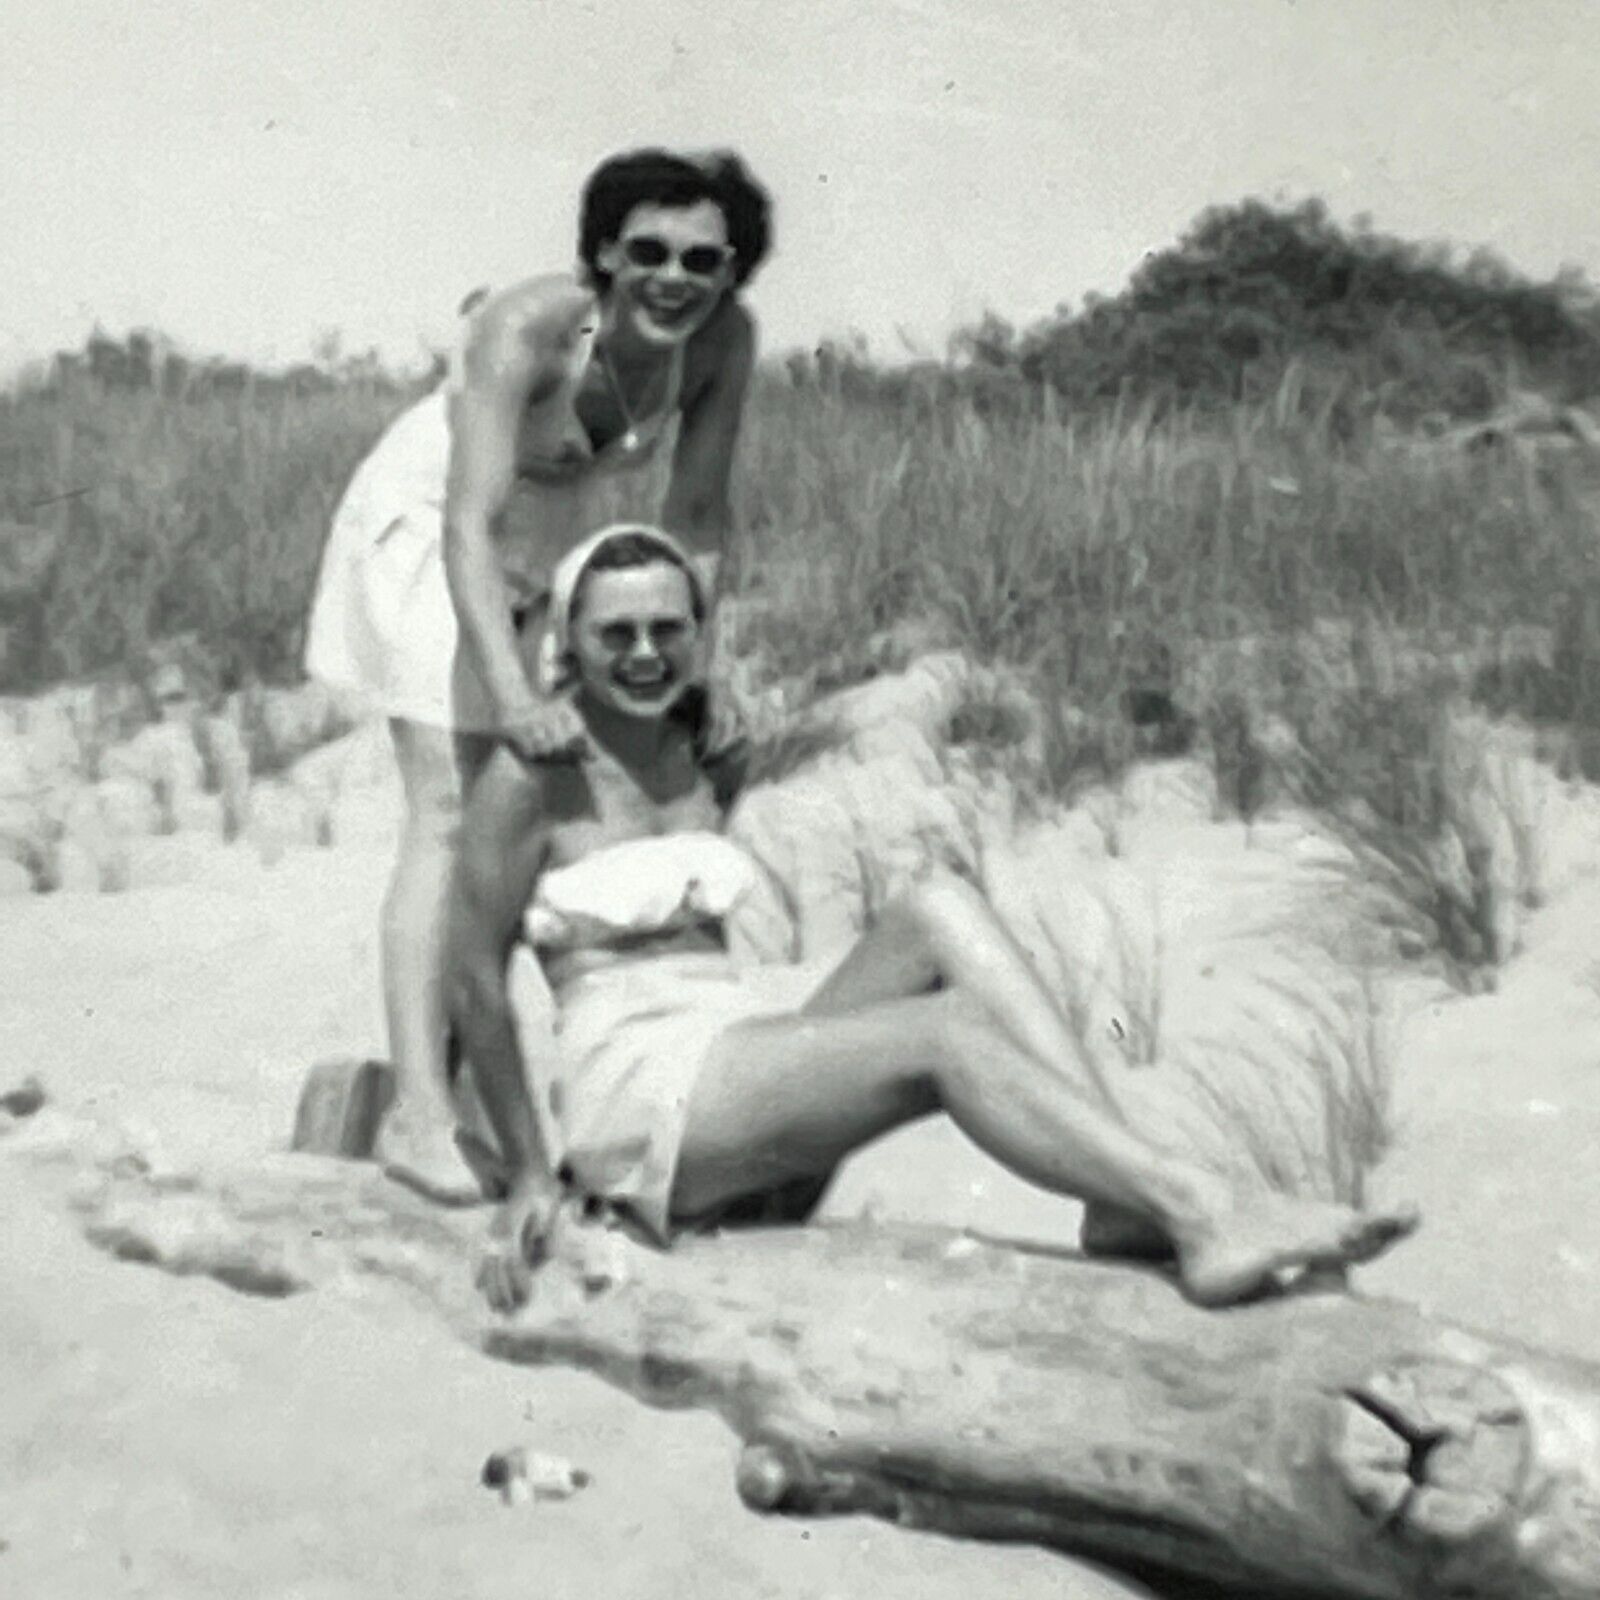 Q6 Photograph Pretty Women Beach Log Sunglasses Laughing Touching Playing